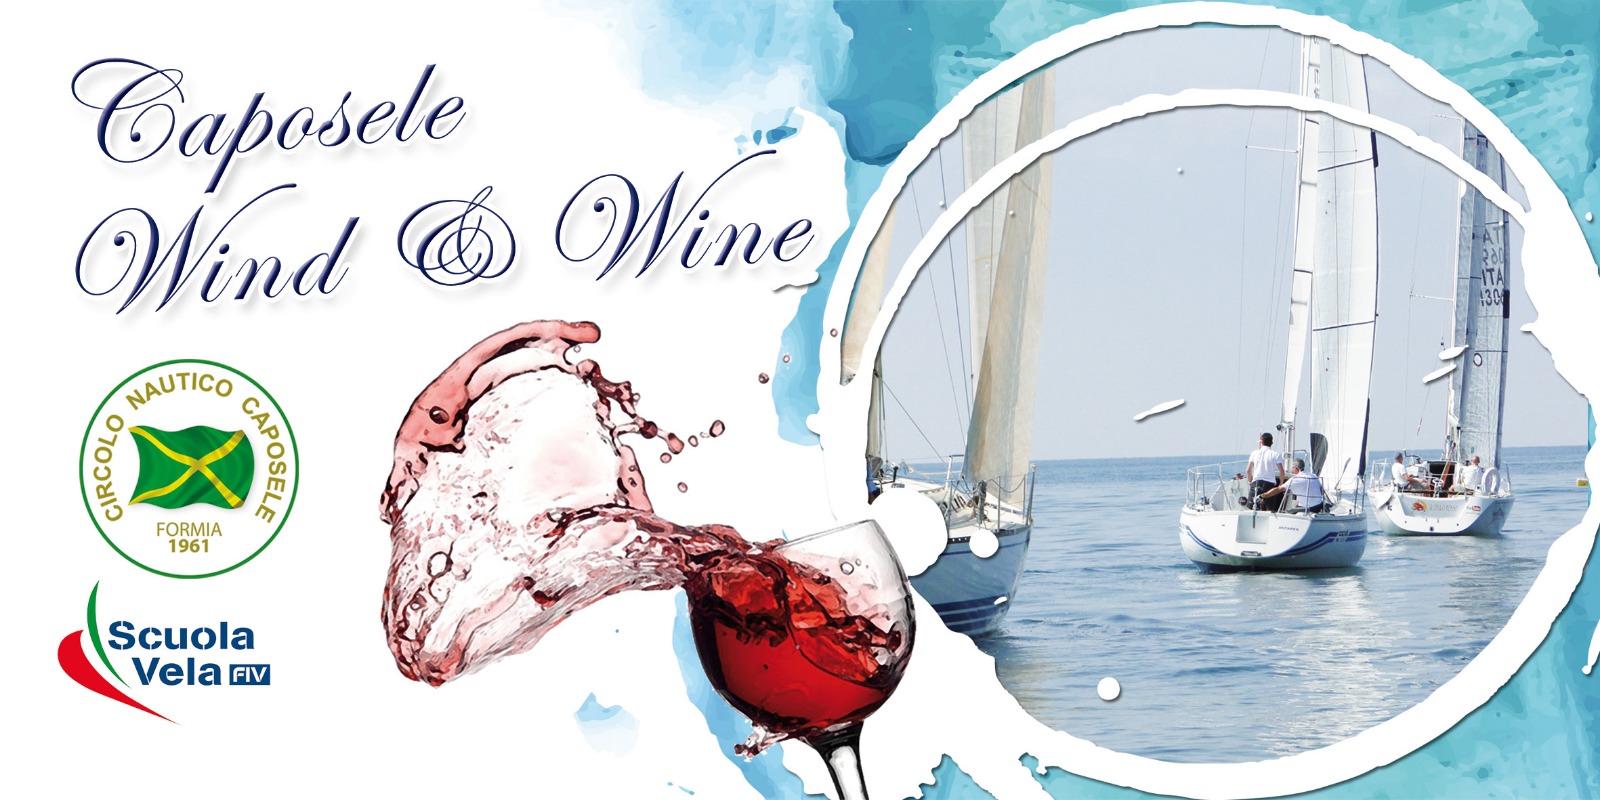 Caposele Wind & Wine